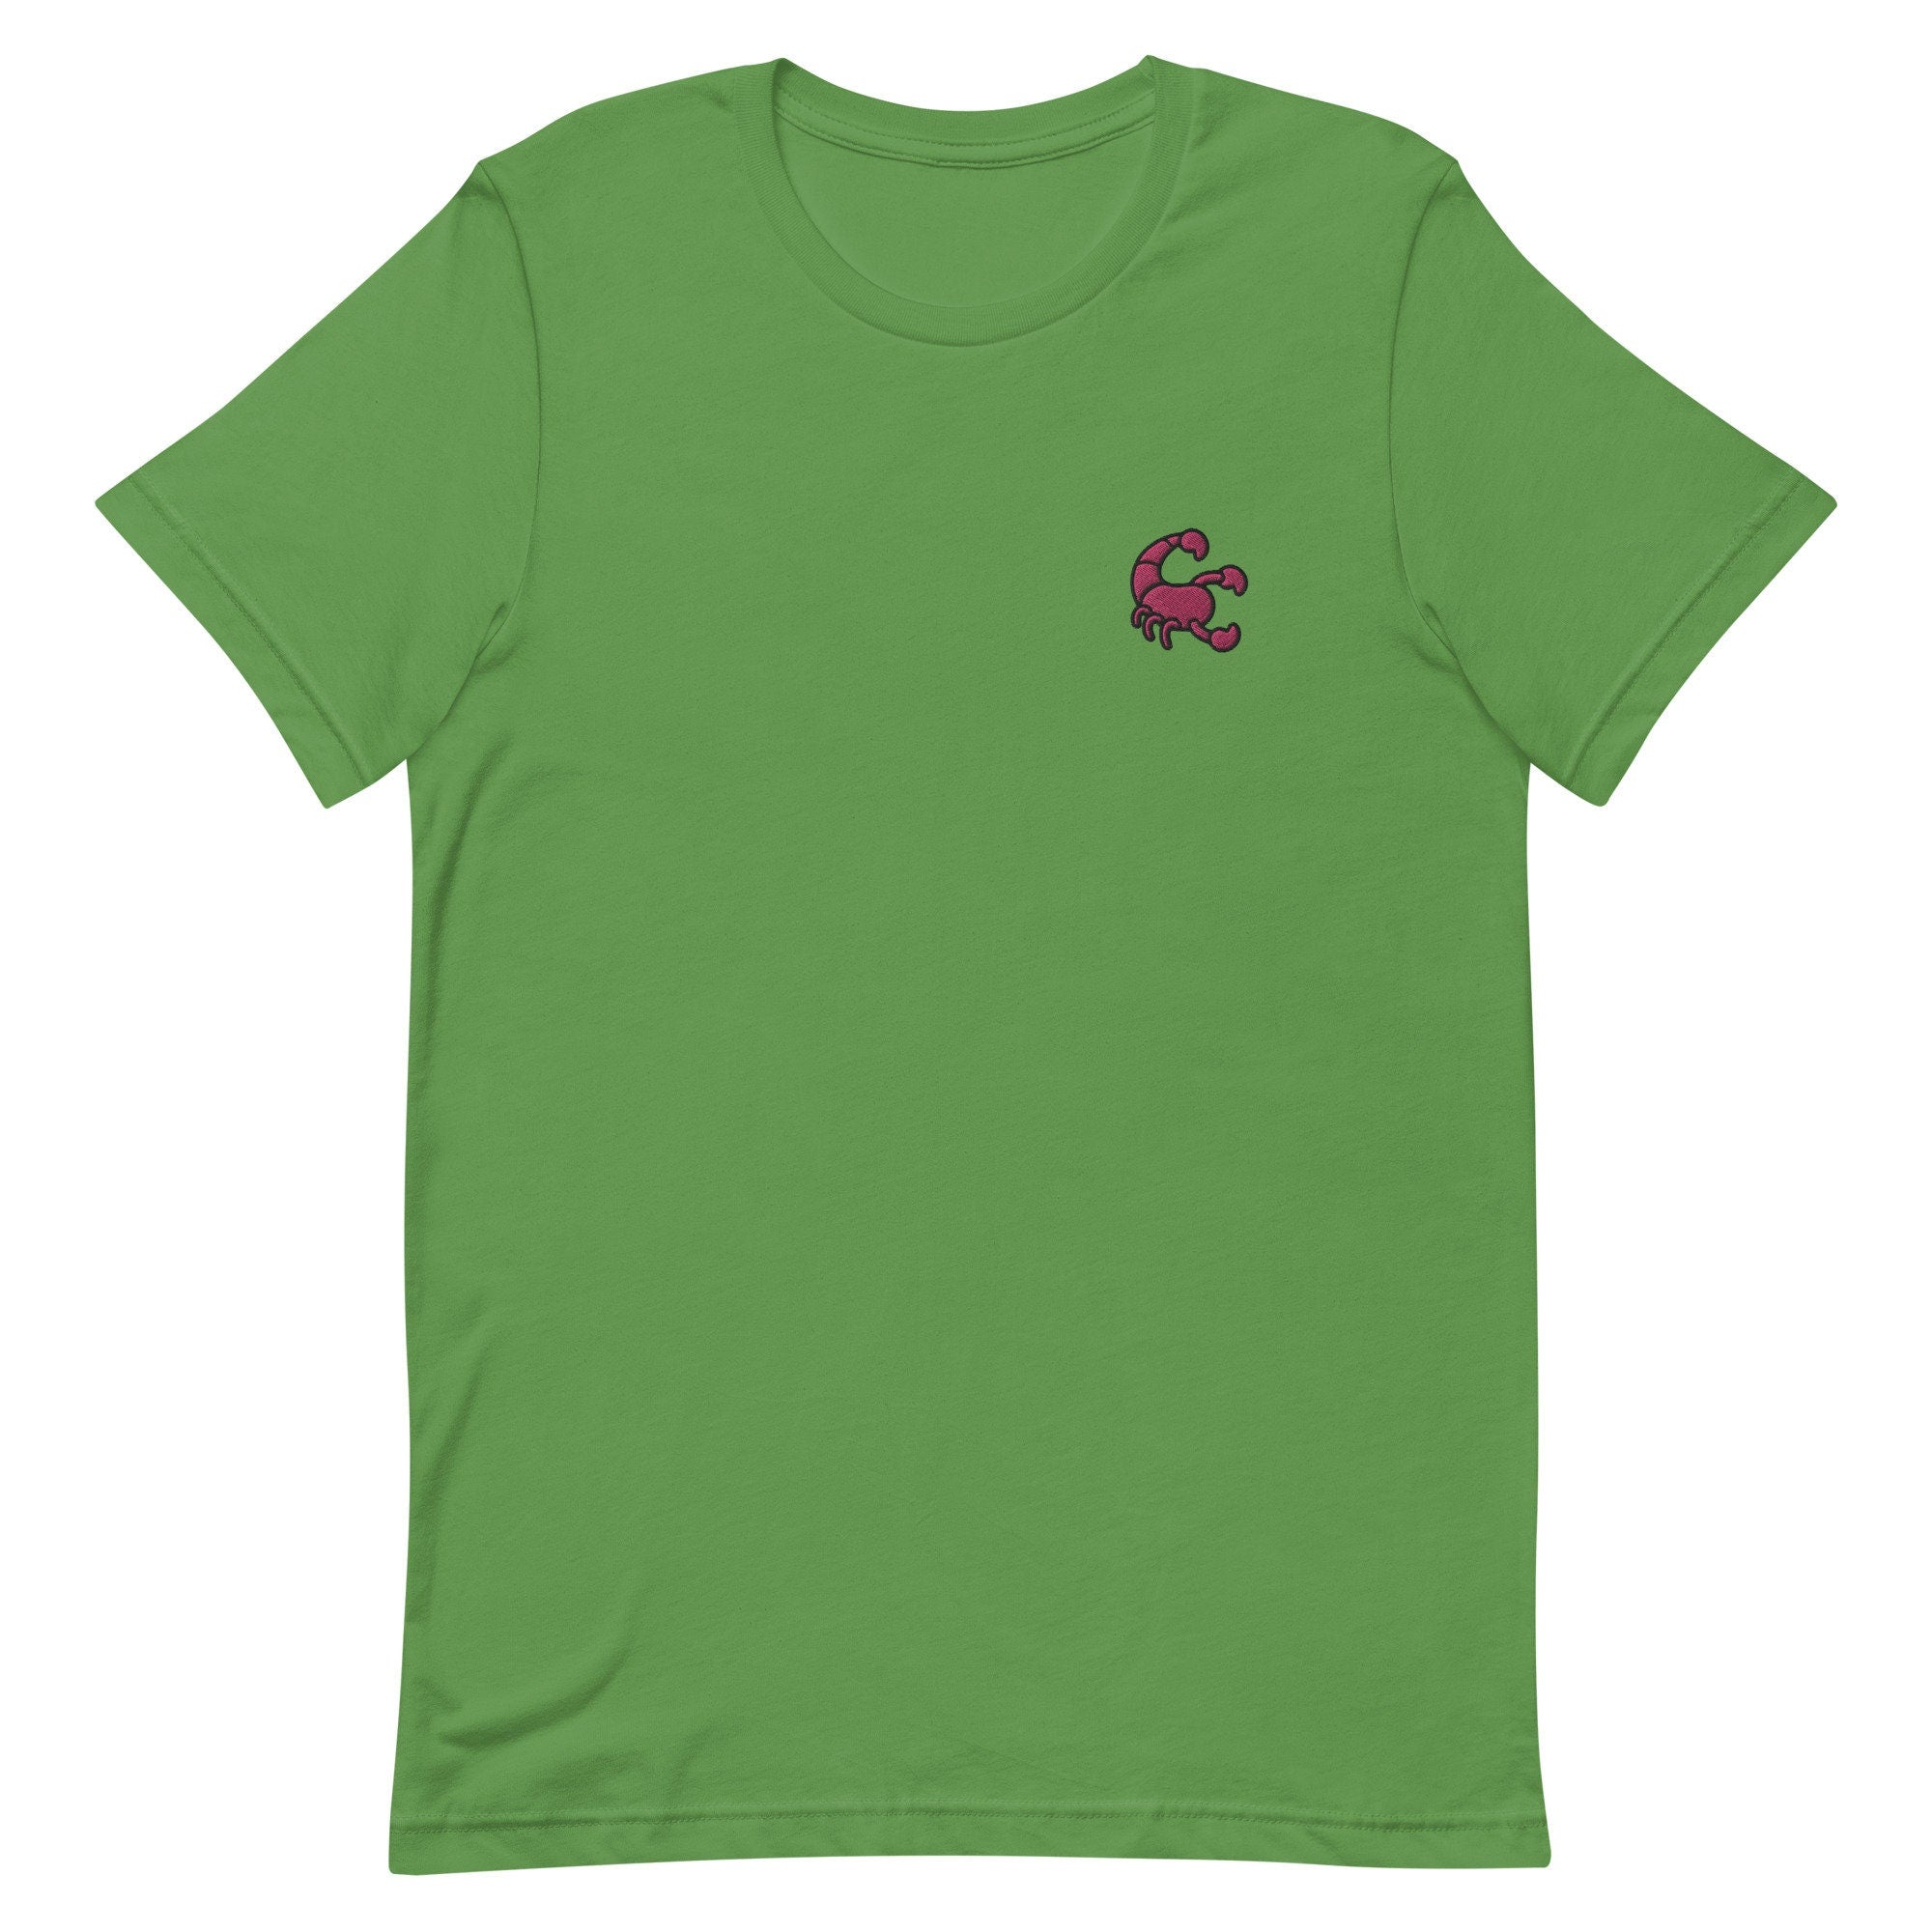 Scorpion Premium Men's T-Shirt, Embroidered Men's T-Shirt Gift for Boyfriend, Men's Short Sleeve Shirt - Multiple Colors